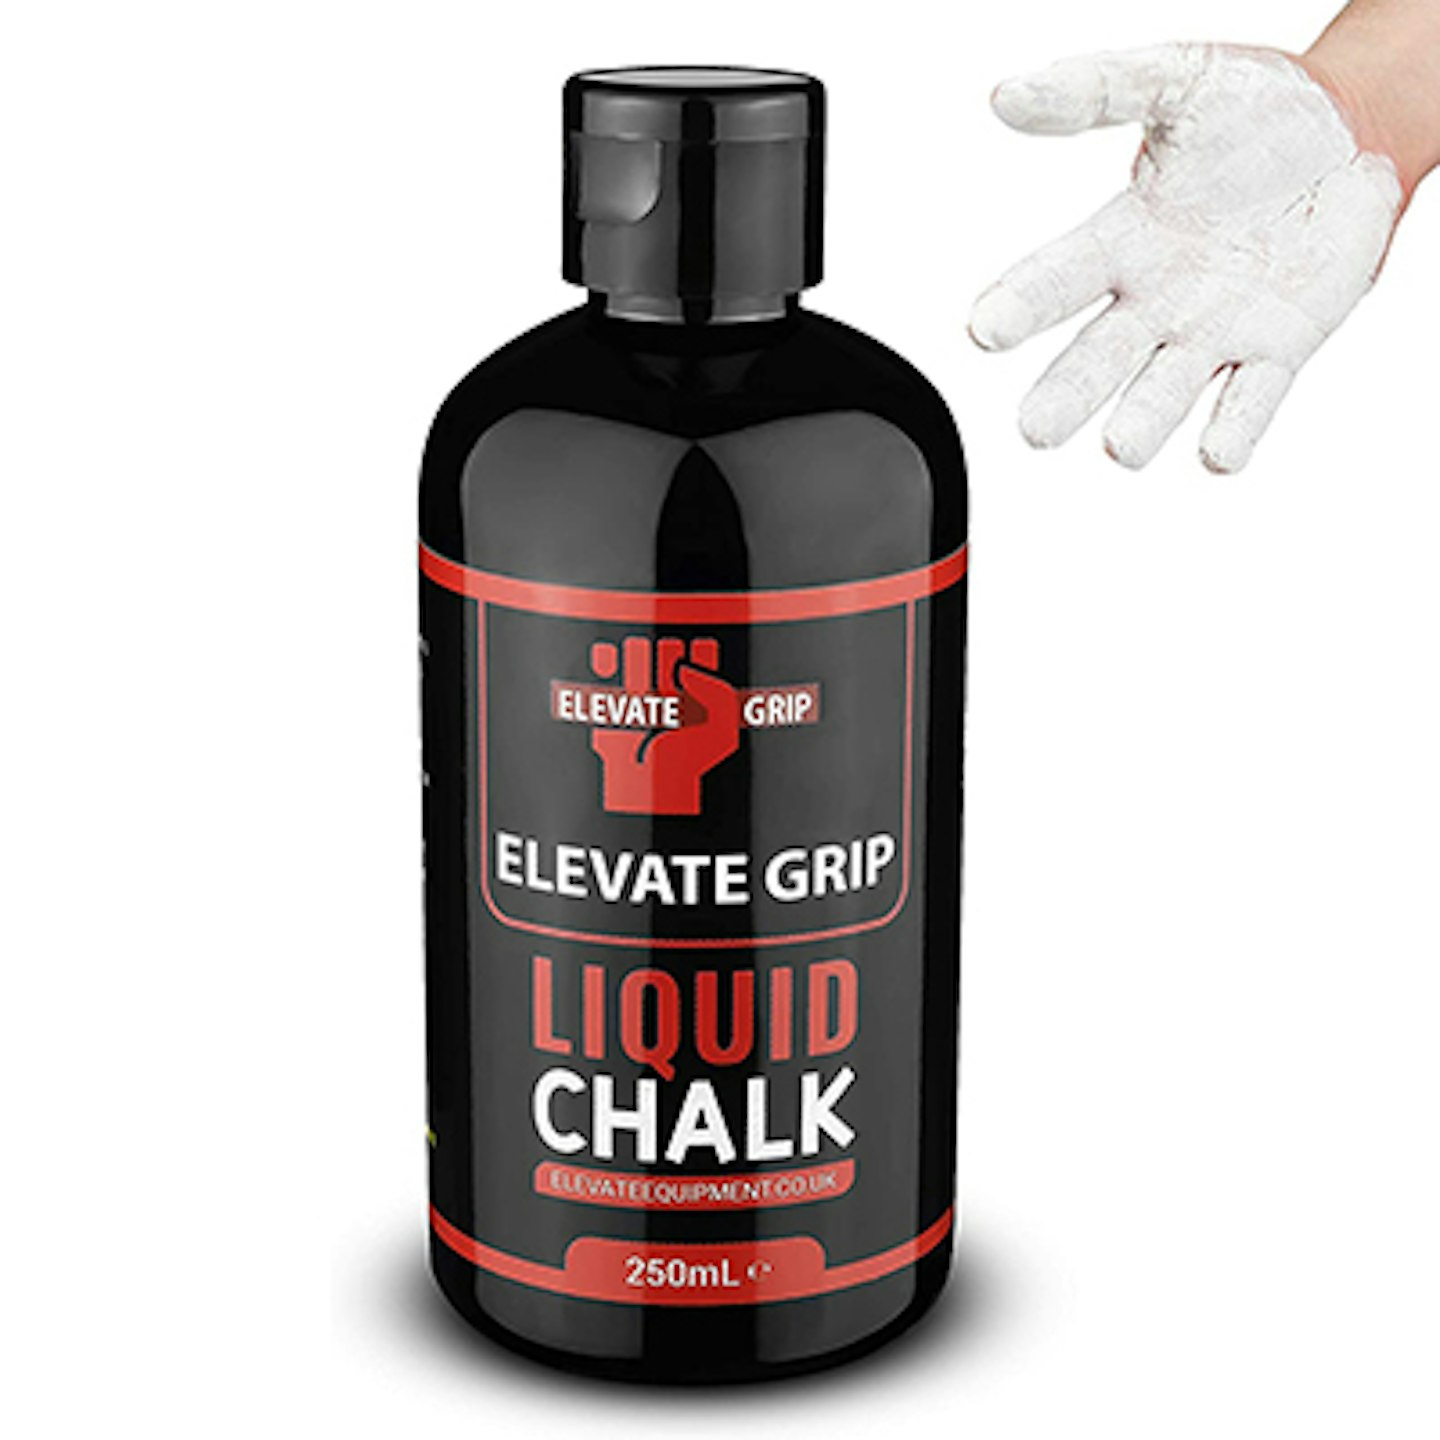 Elevate liquid chalk